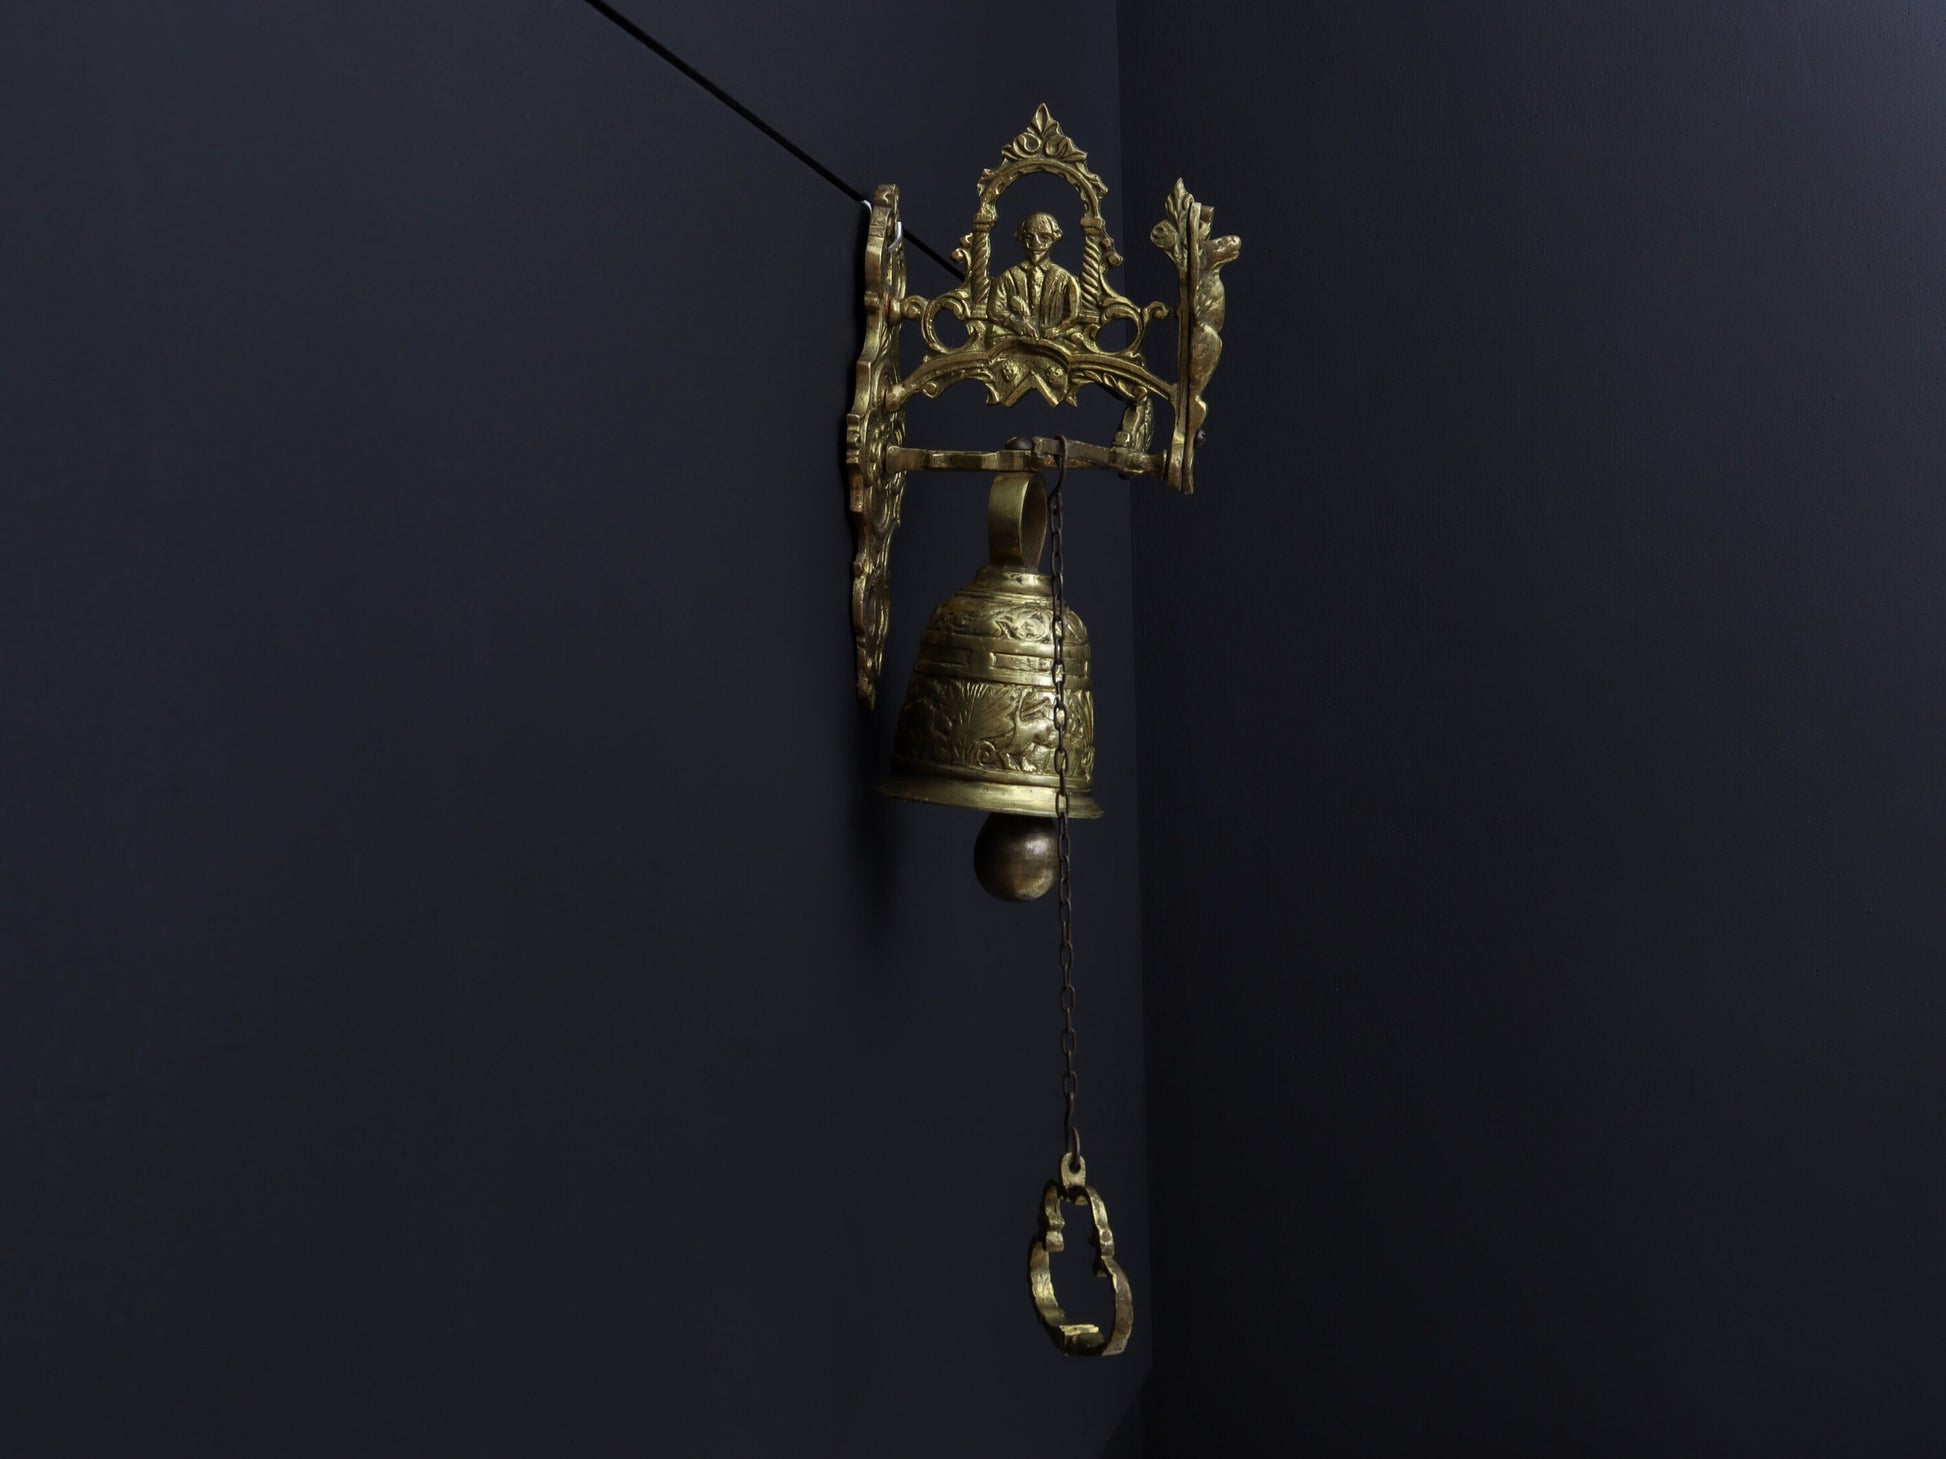 Wall Mounted Bell | Modern Farmhouse Decor, Dinner Bell | Brass Bell , Country Home Decor